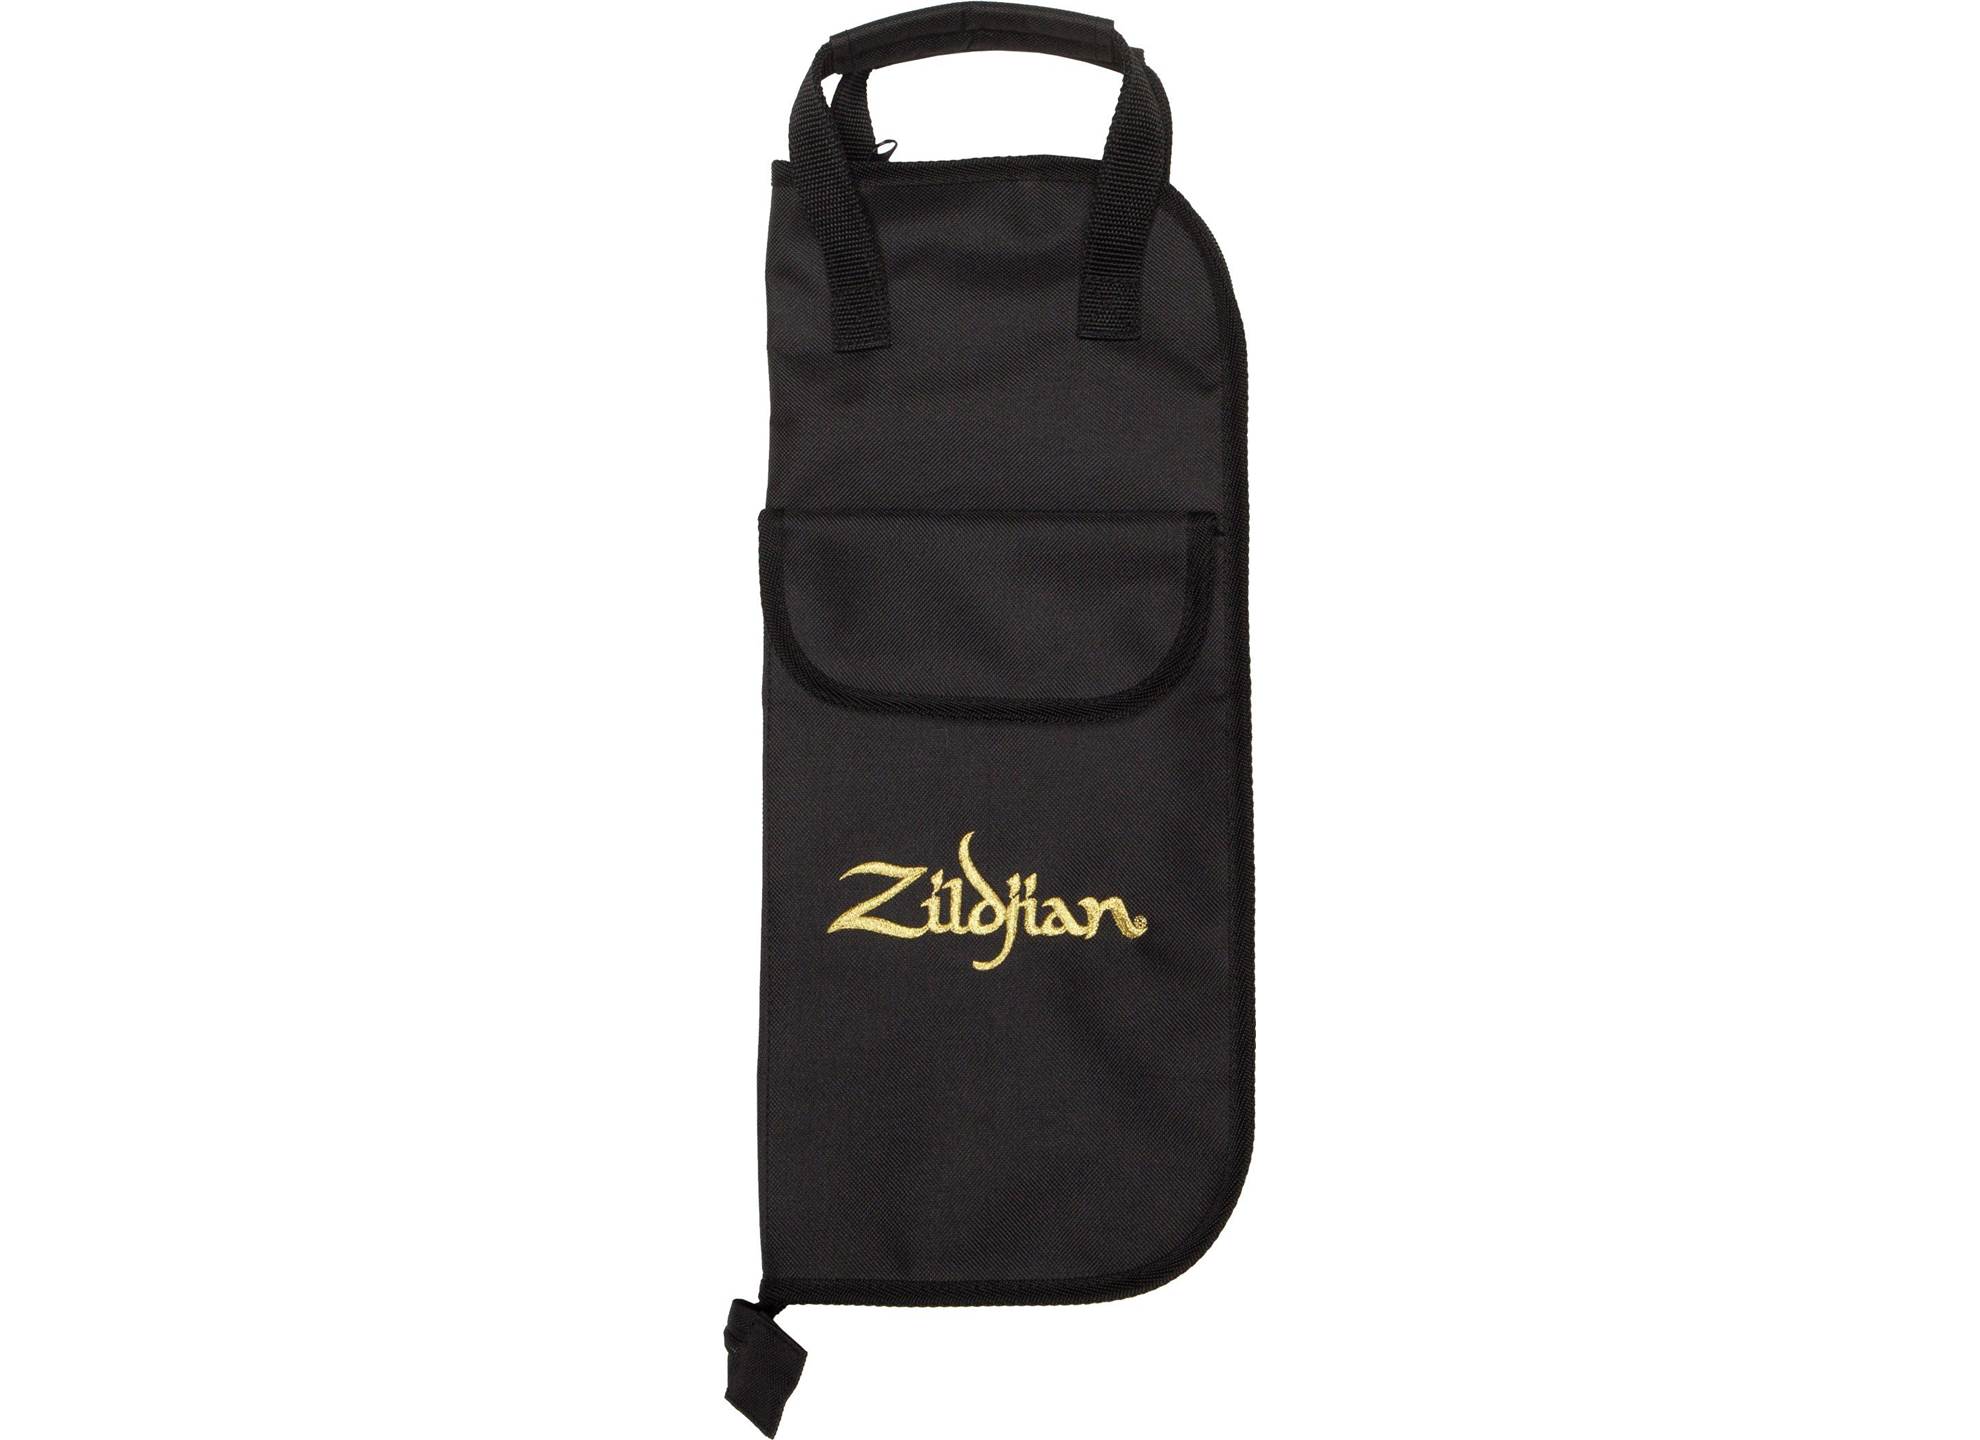 ZSB Basic Drum Stick Bag